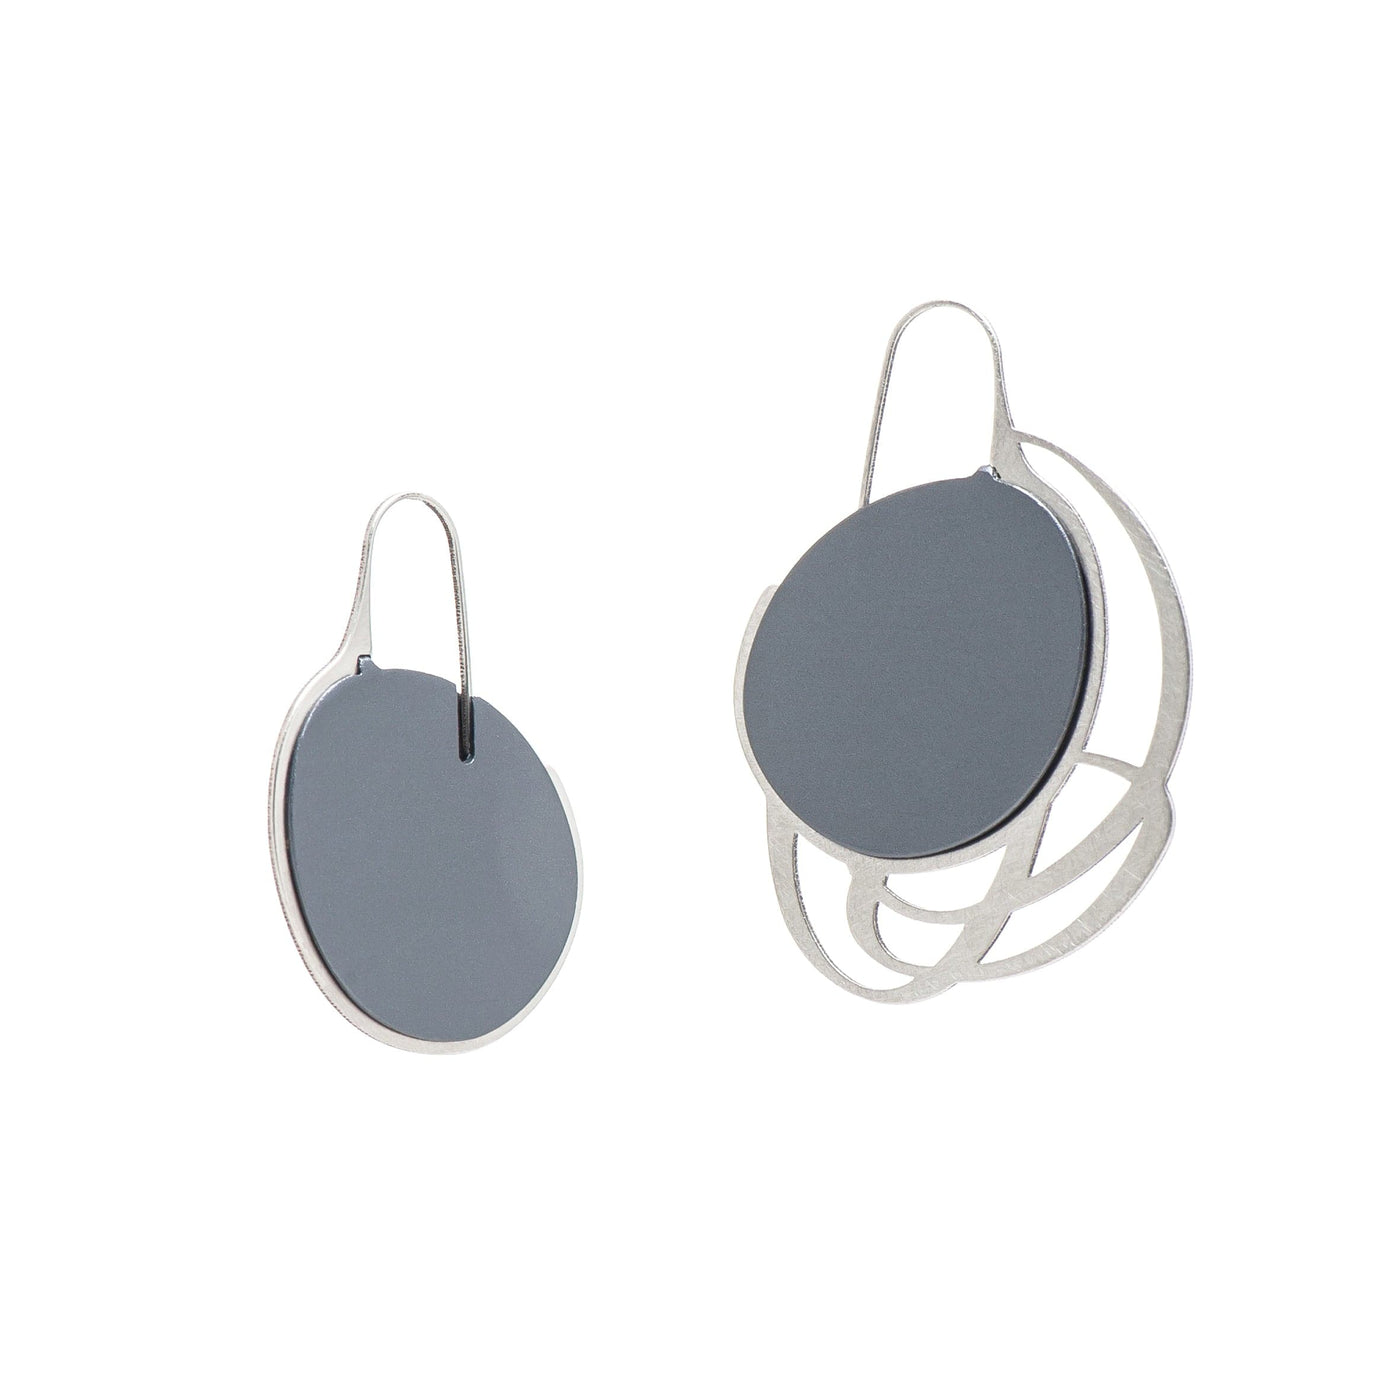 Pebble Earrings Small Mix - Navy - inSync design